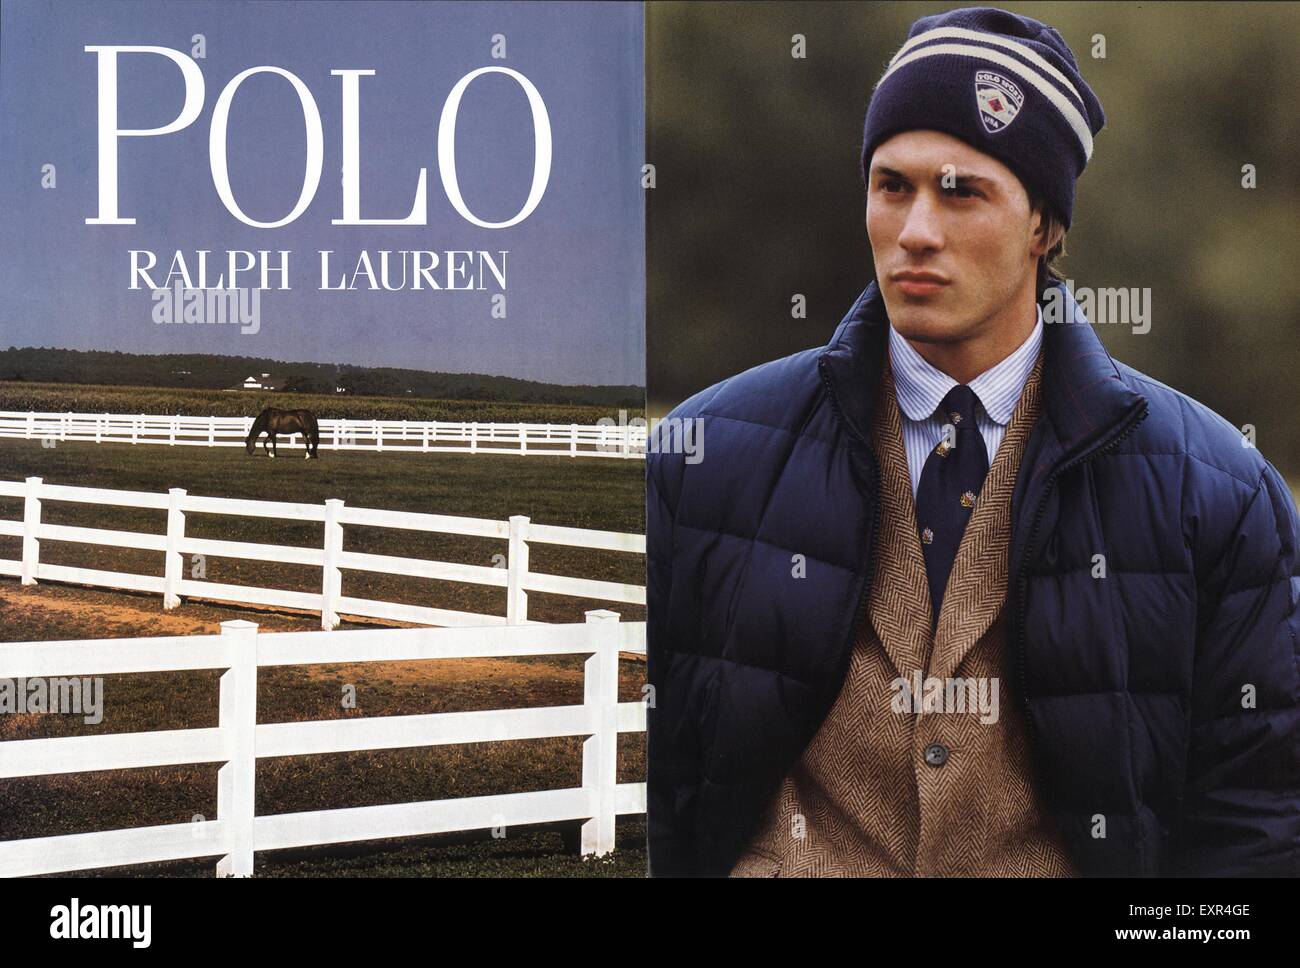 1990er Jahre UK Polo Ralph Lauren Herren Mode Magazin Anzeige  Stockfotografie - Alamy